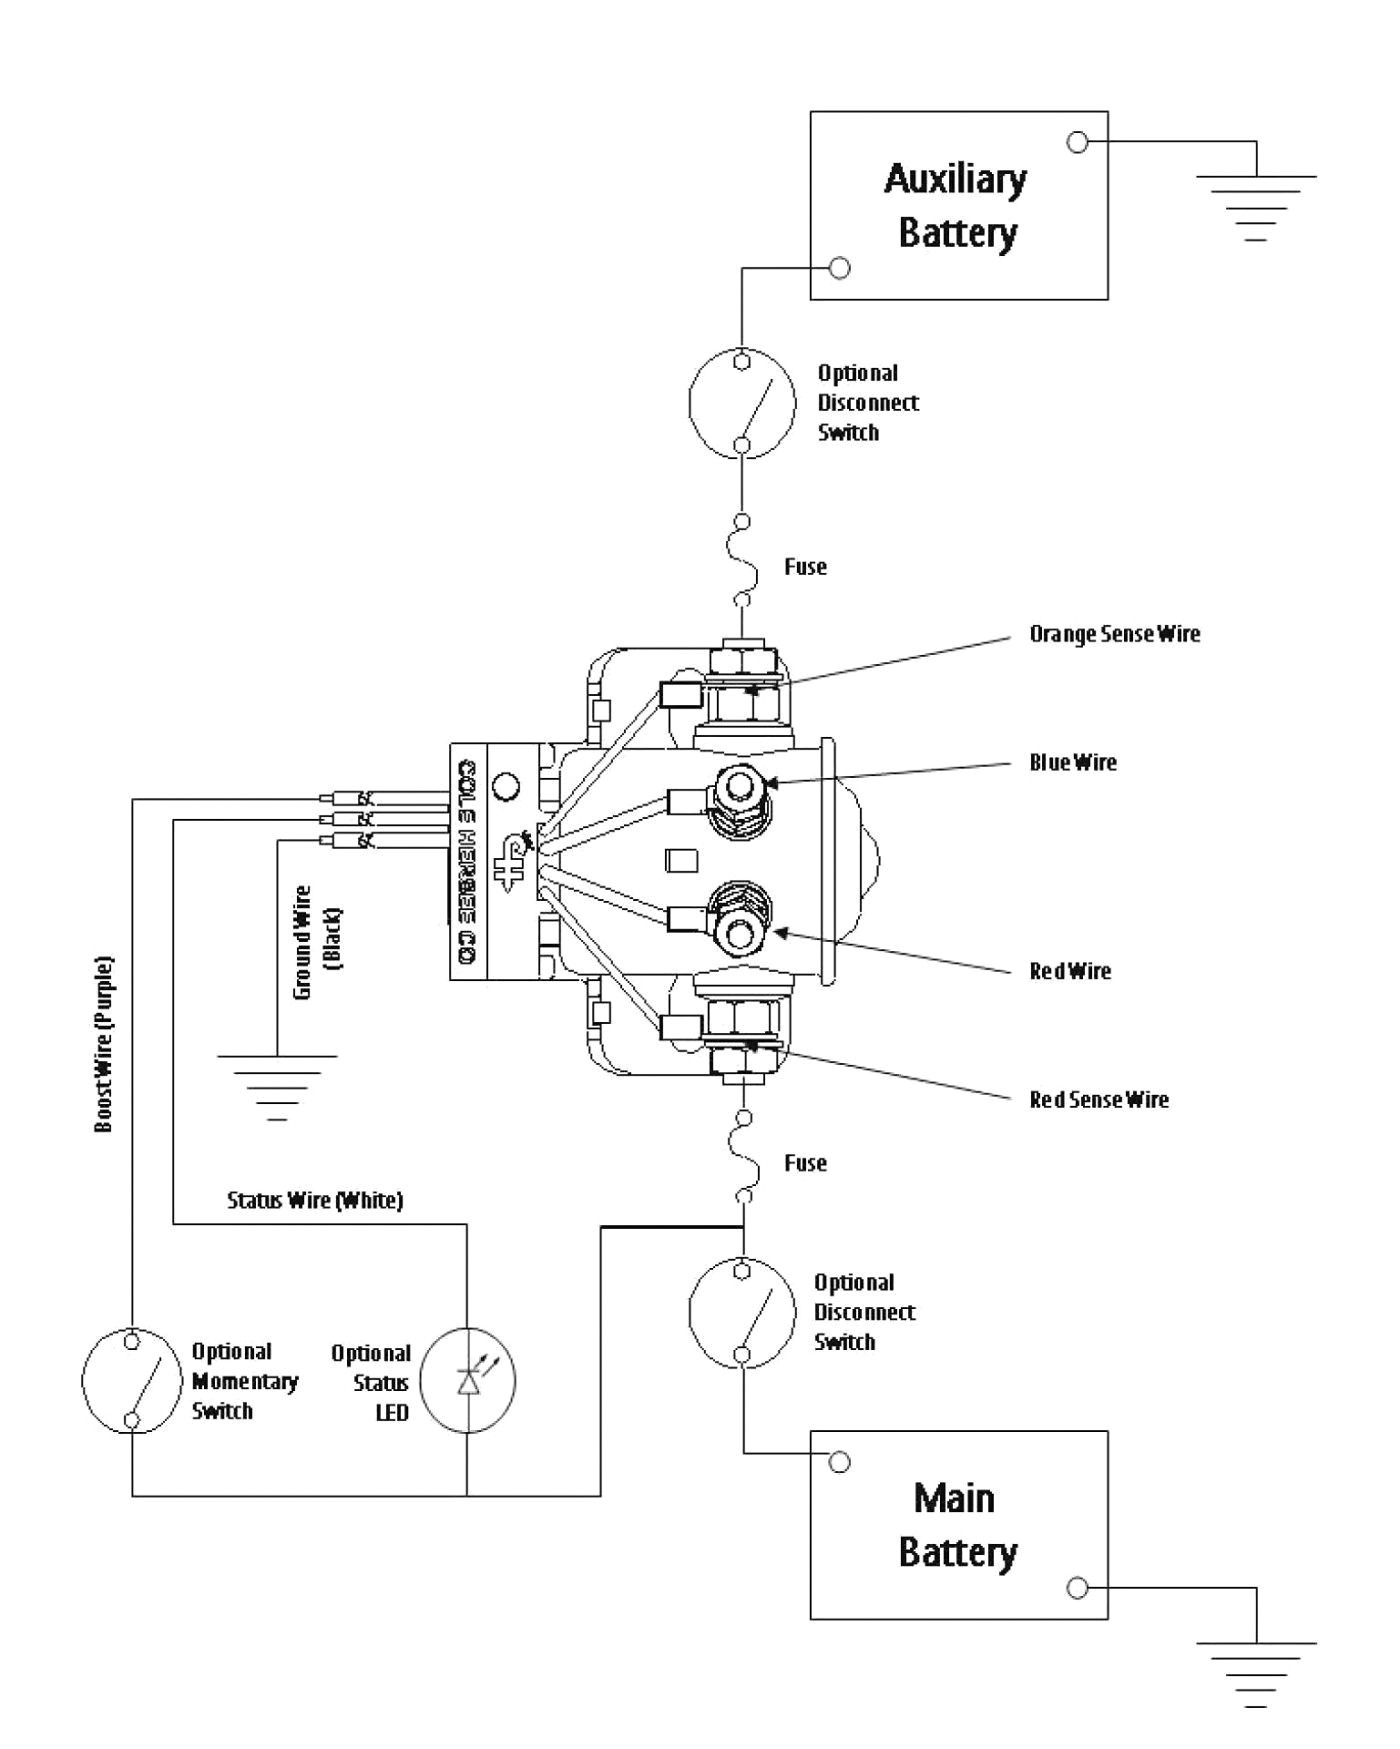 wiring diagram for carolina skiff fresh blue wave boat wiring diagram trusted wiring diagram